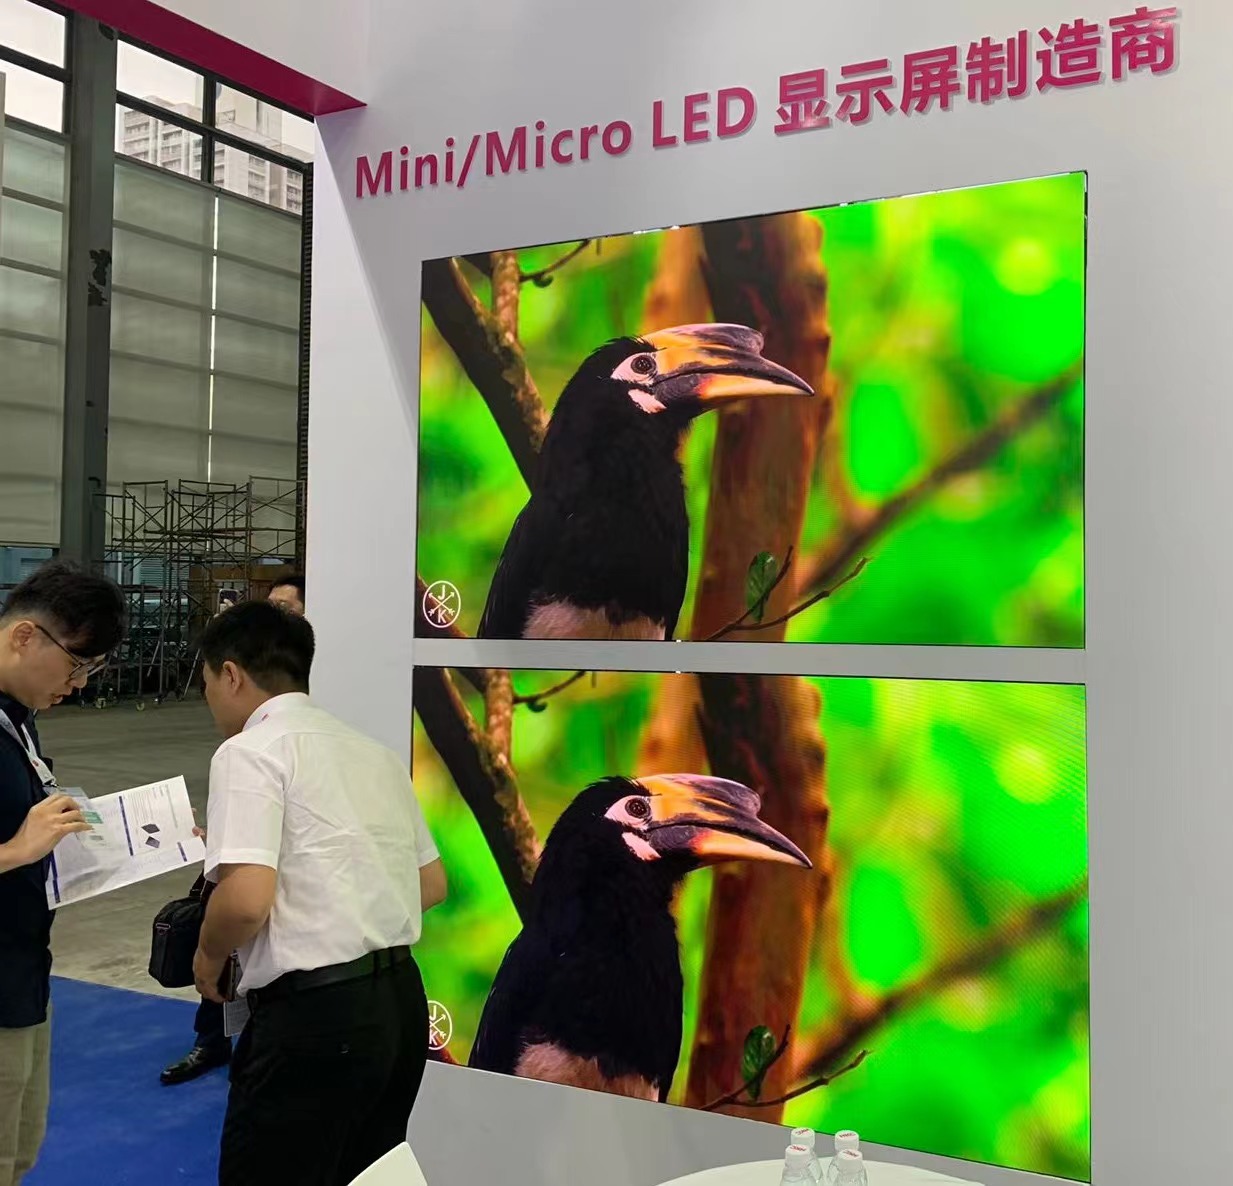 Micro LED大规模应用处萌芽期，行业为量产摩拳擦掌